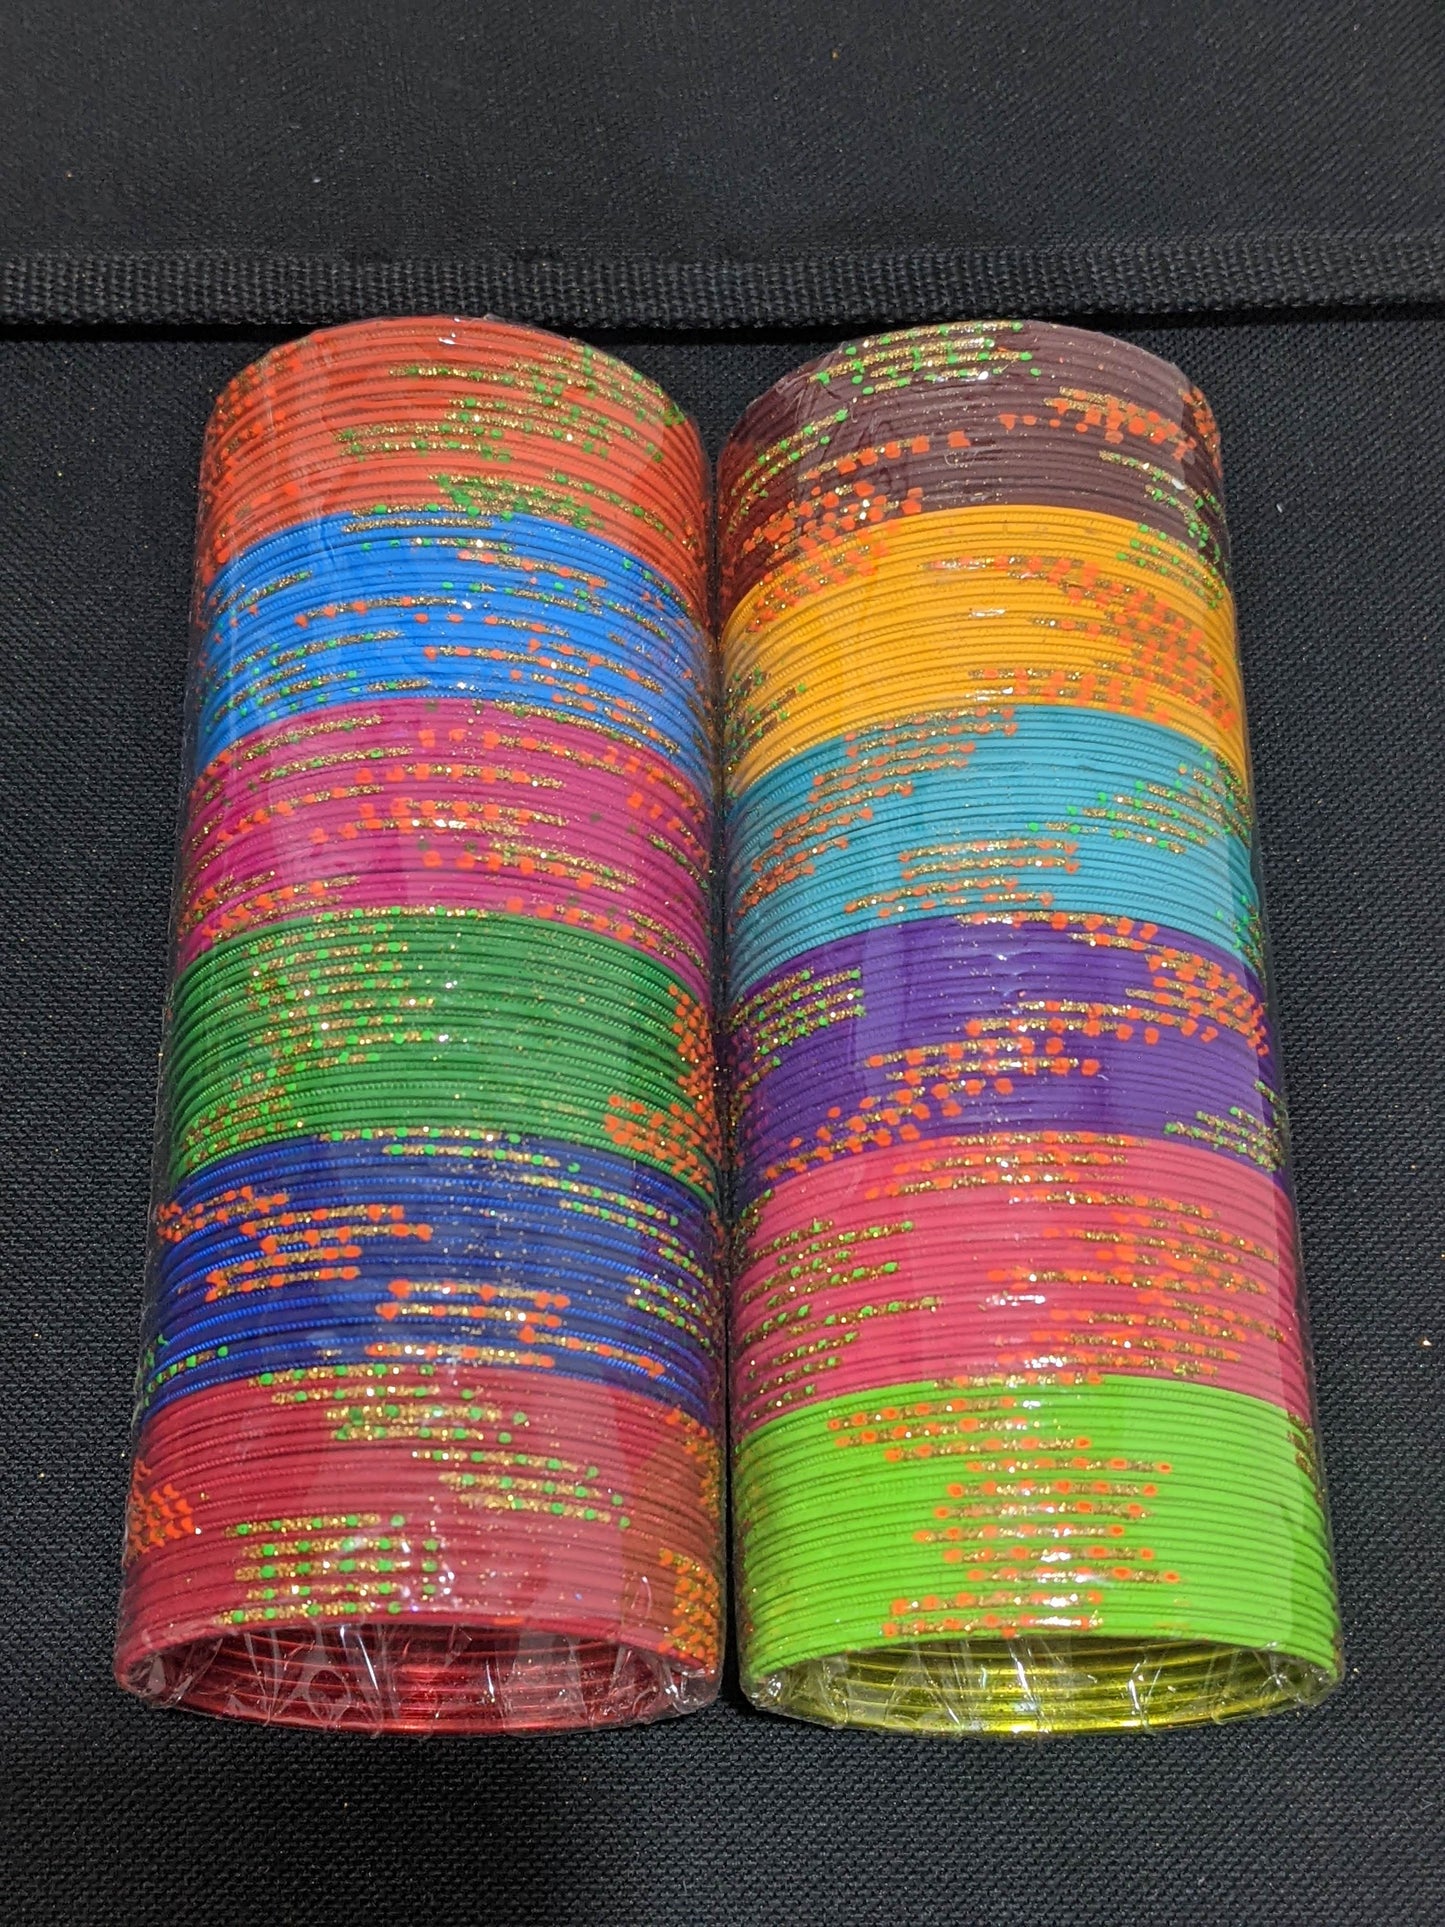 2x10 Bangles / Big size bangles  / Colorful Thin Metal Bangles - 1 dozen